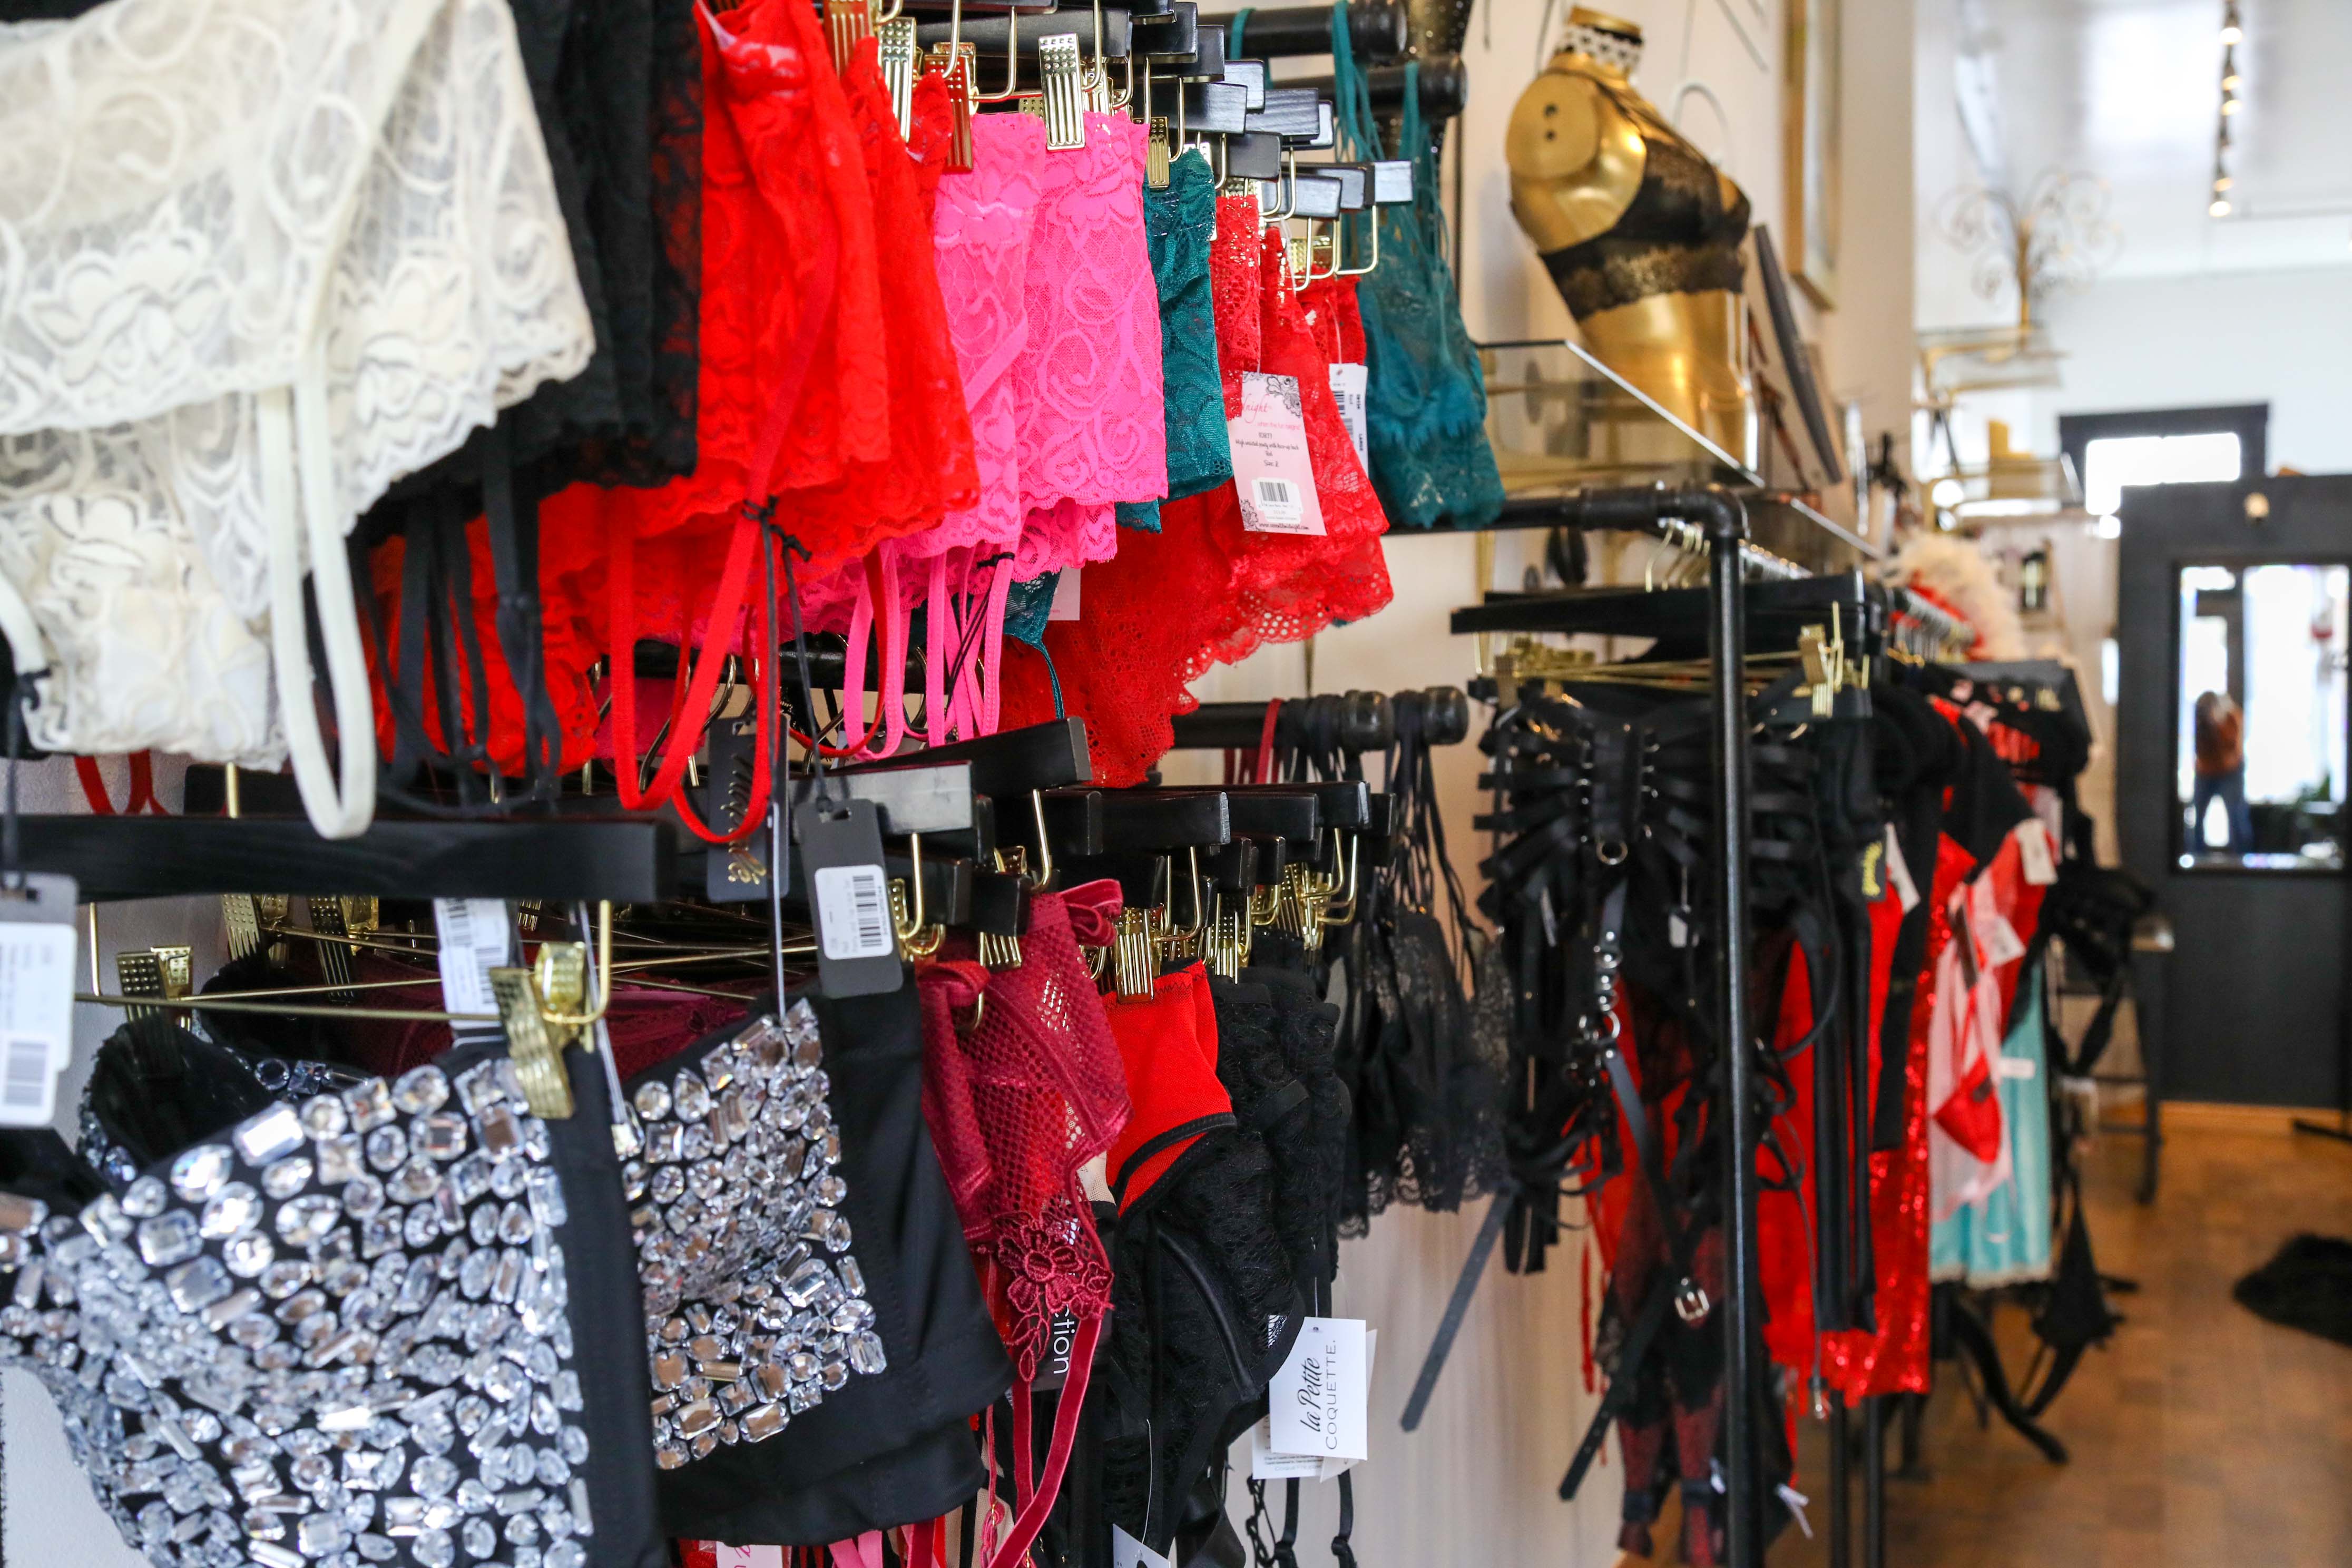 Broadway Girls Lace Bodysuit • Impressions Online Boutique